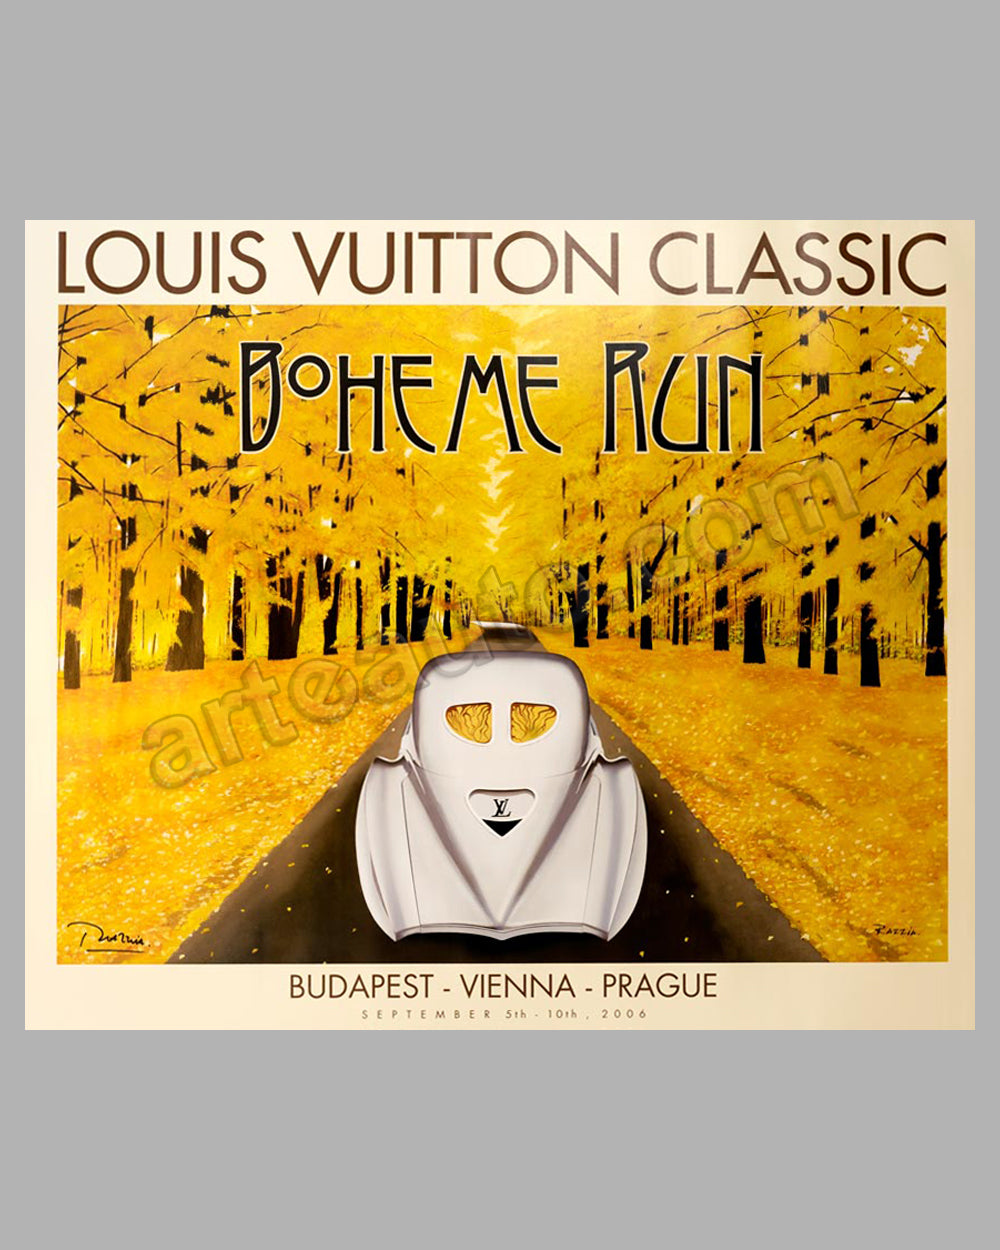 Louis Vuitton Classic 2006 Boheme Run original poster by Razzia